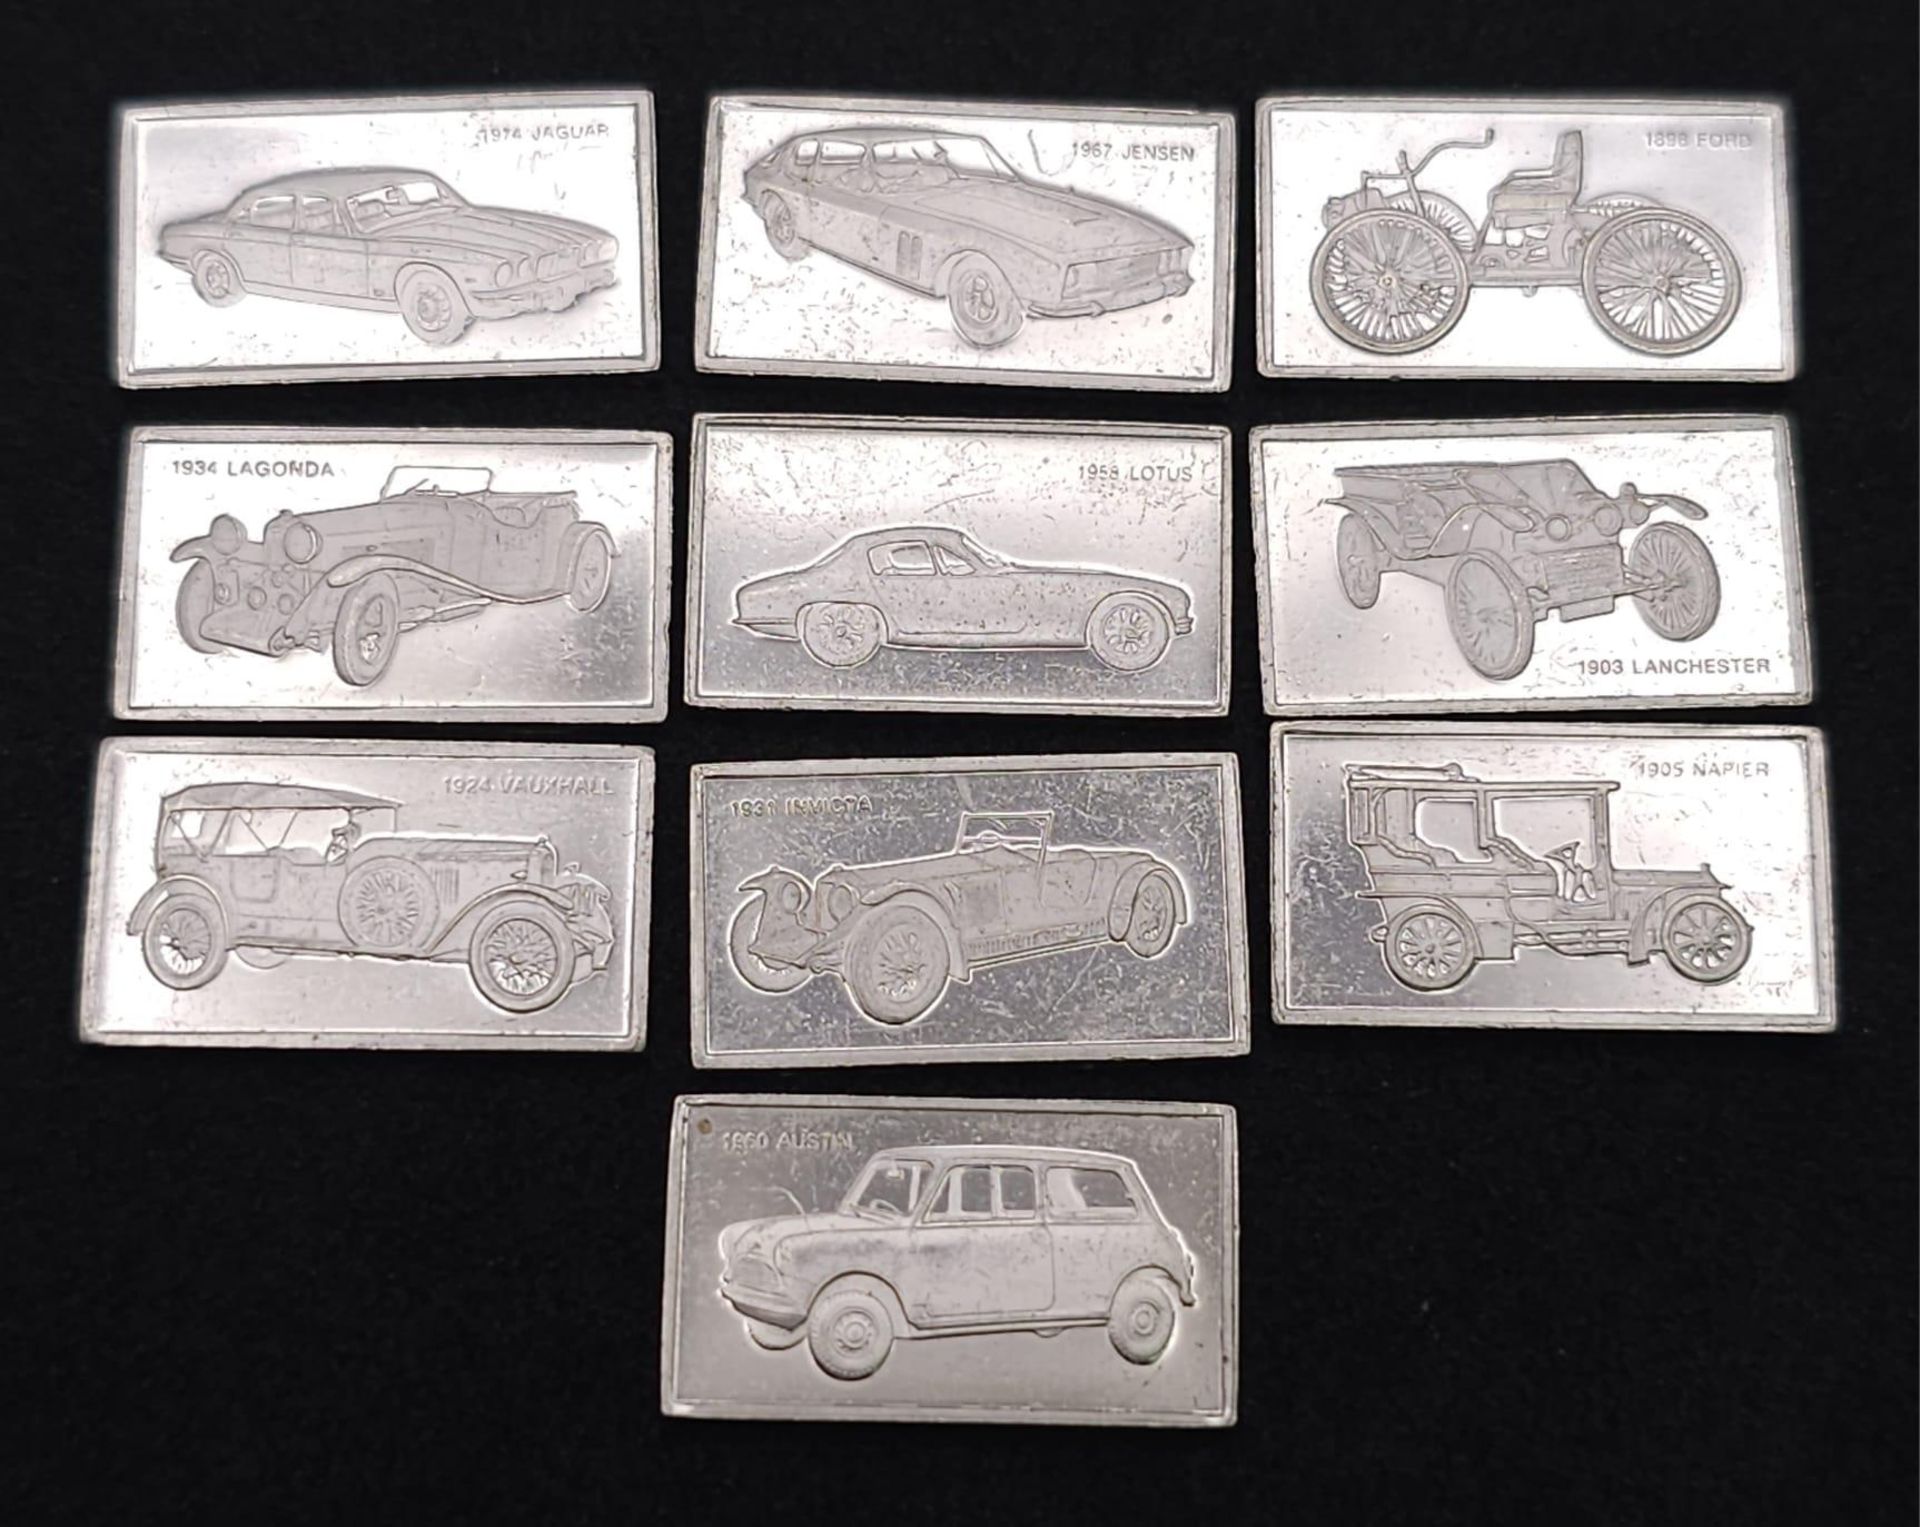 TEN sterling silver European Car Manufacturer's plates, including Jaguar, Lagonda, Napier, Jensen, - Image 2 of 3